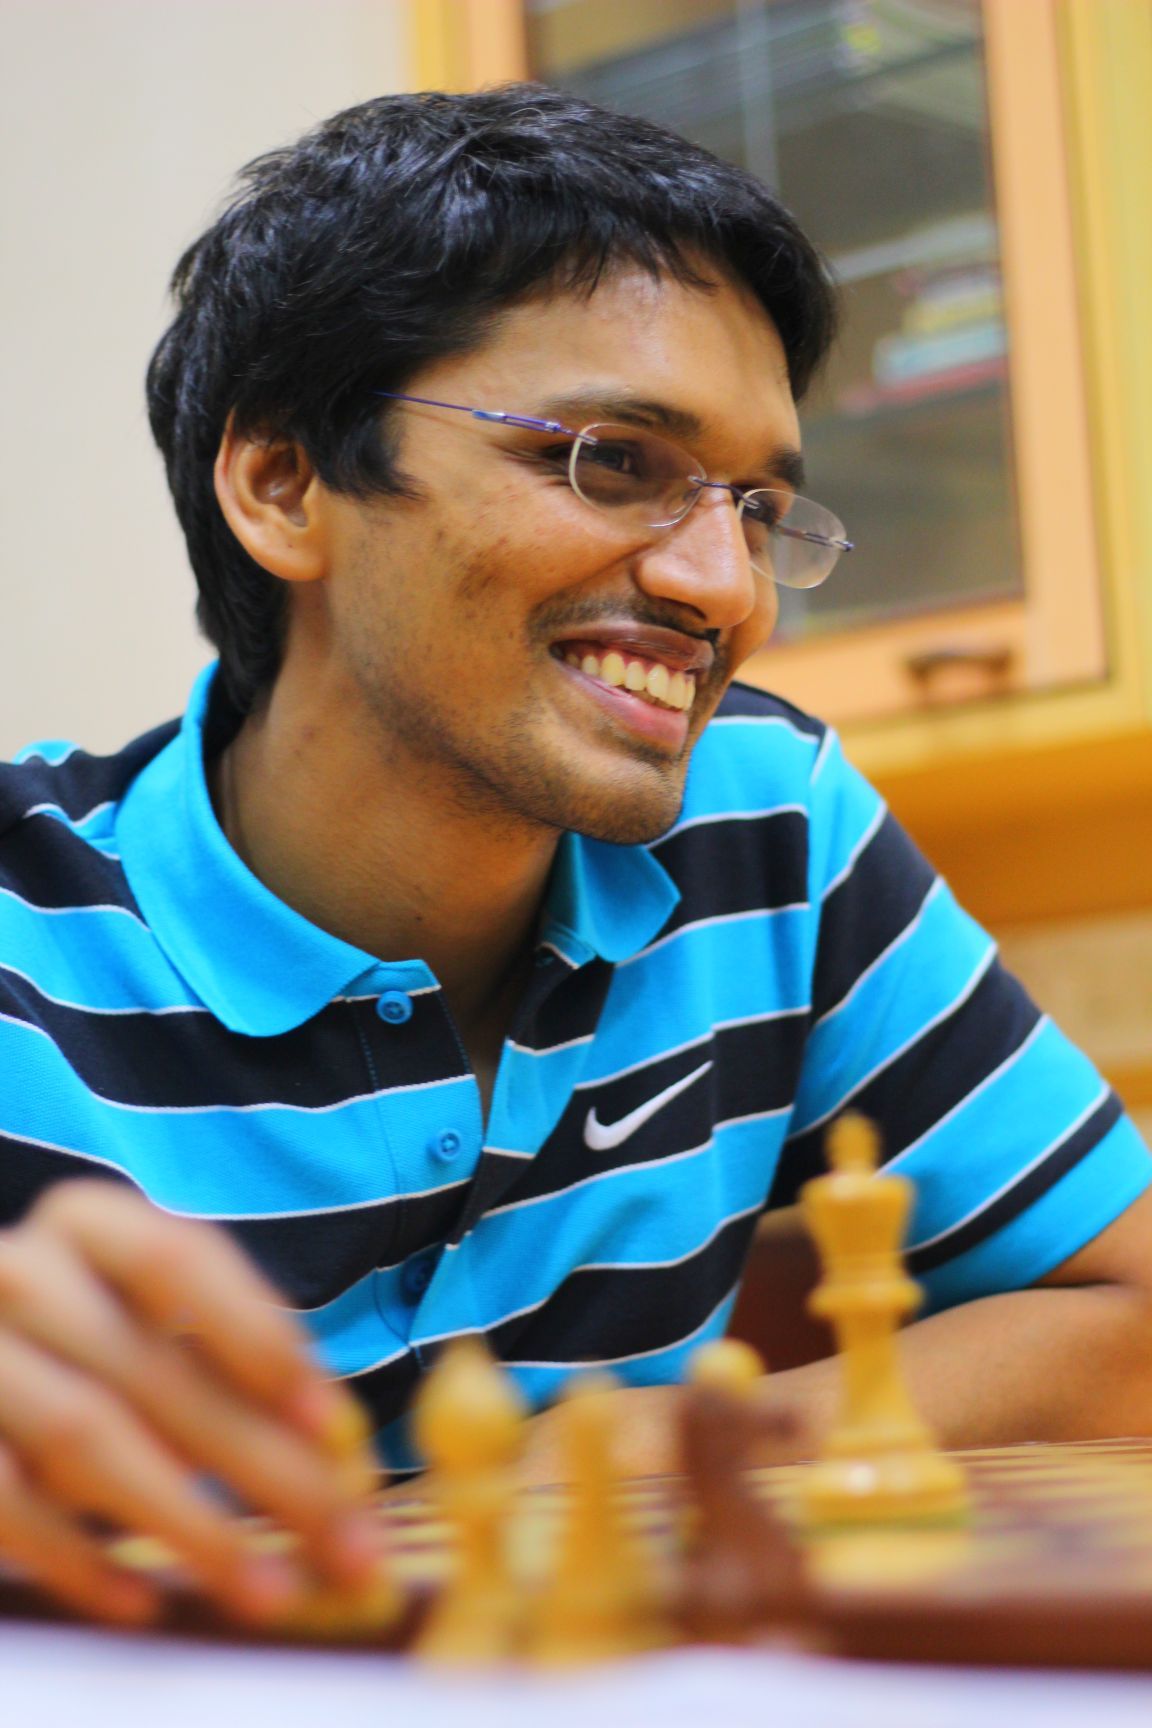 The Best Chess Games of Pentala Harikrishna 